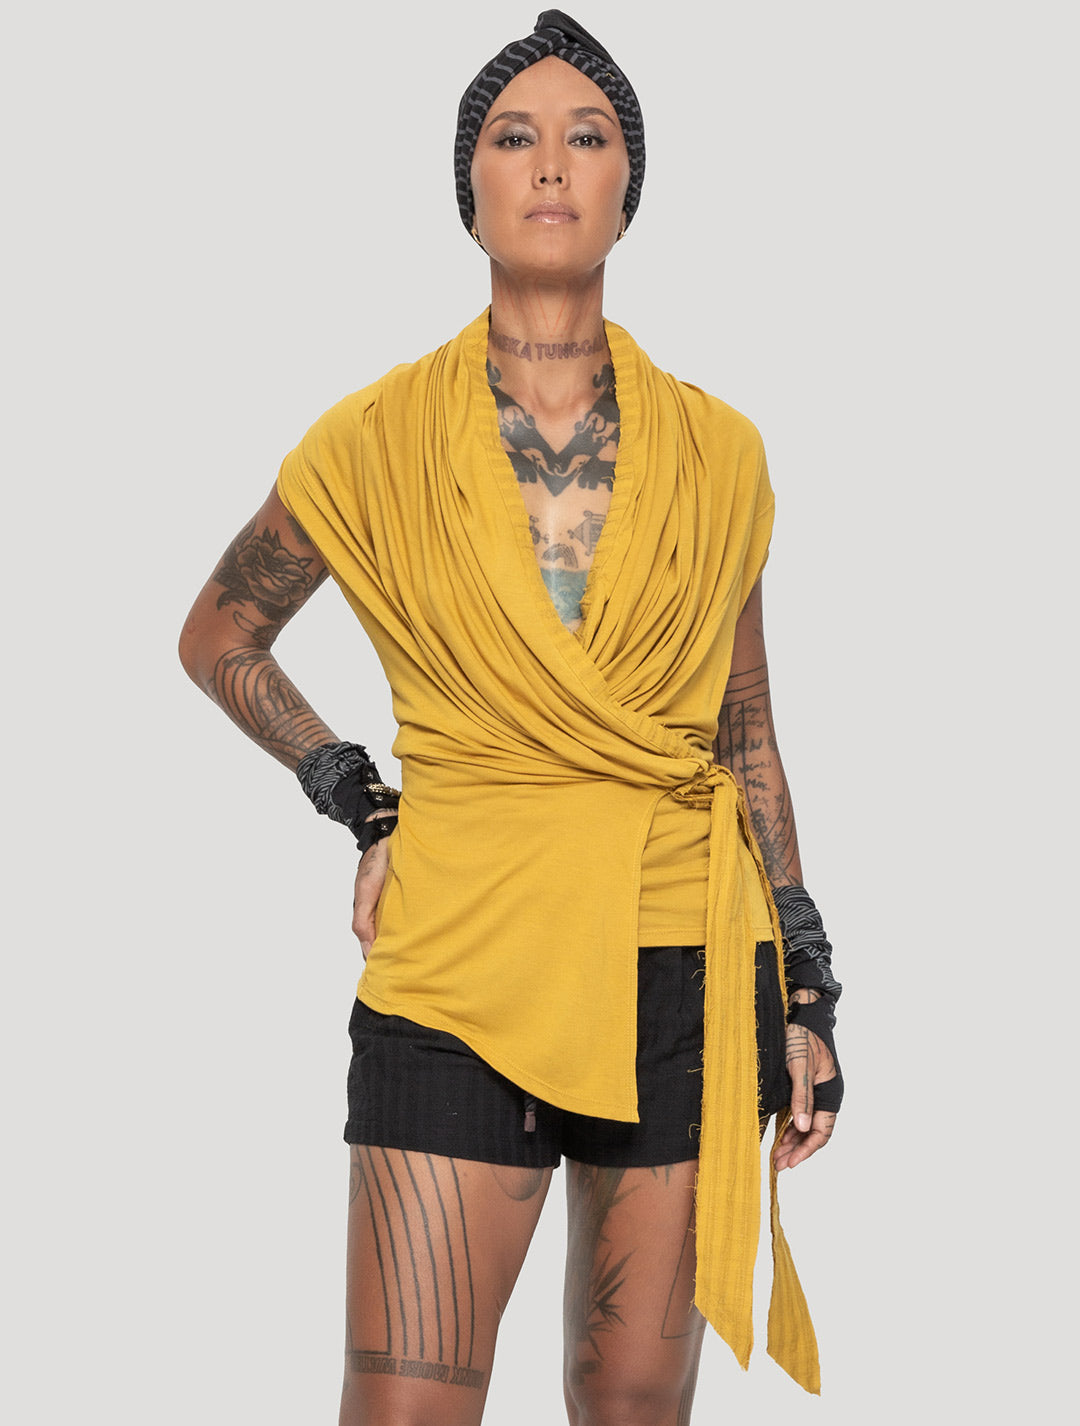 Saffron 'Sorcerer' 100% Bamboo Hooded Wrap Top - Psylo Fashion